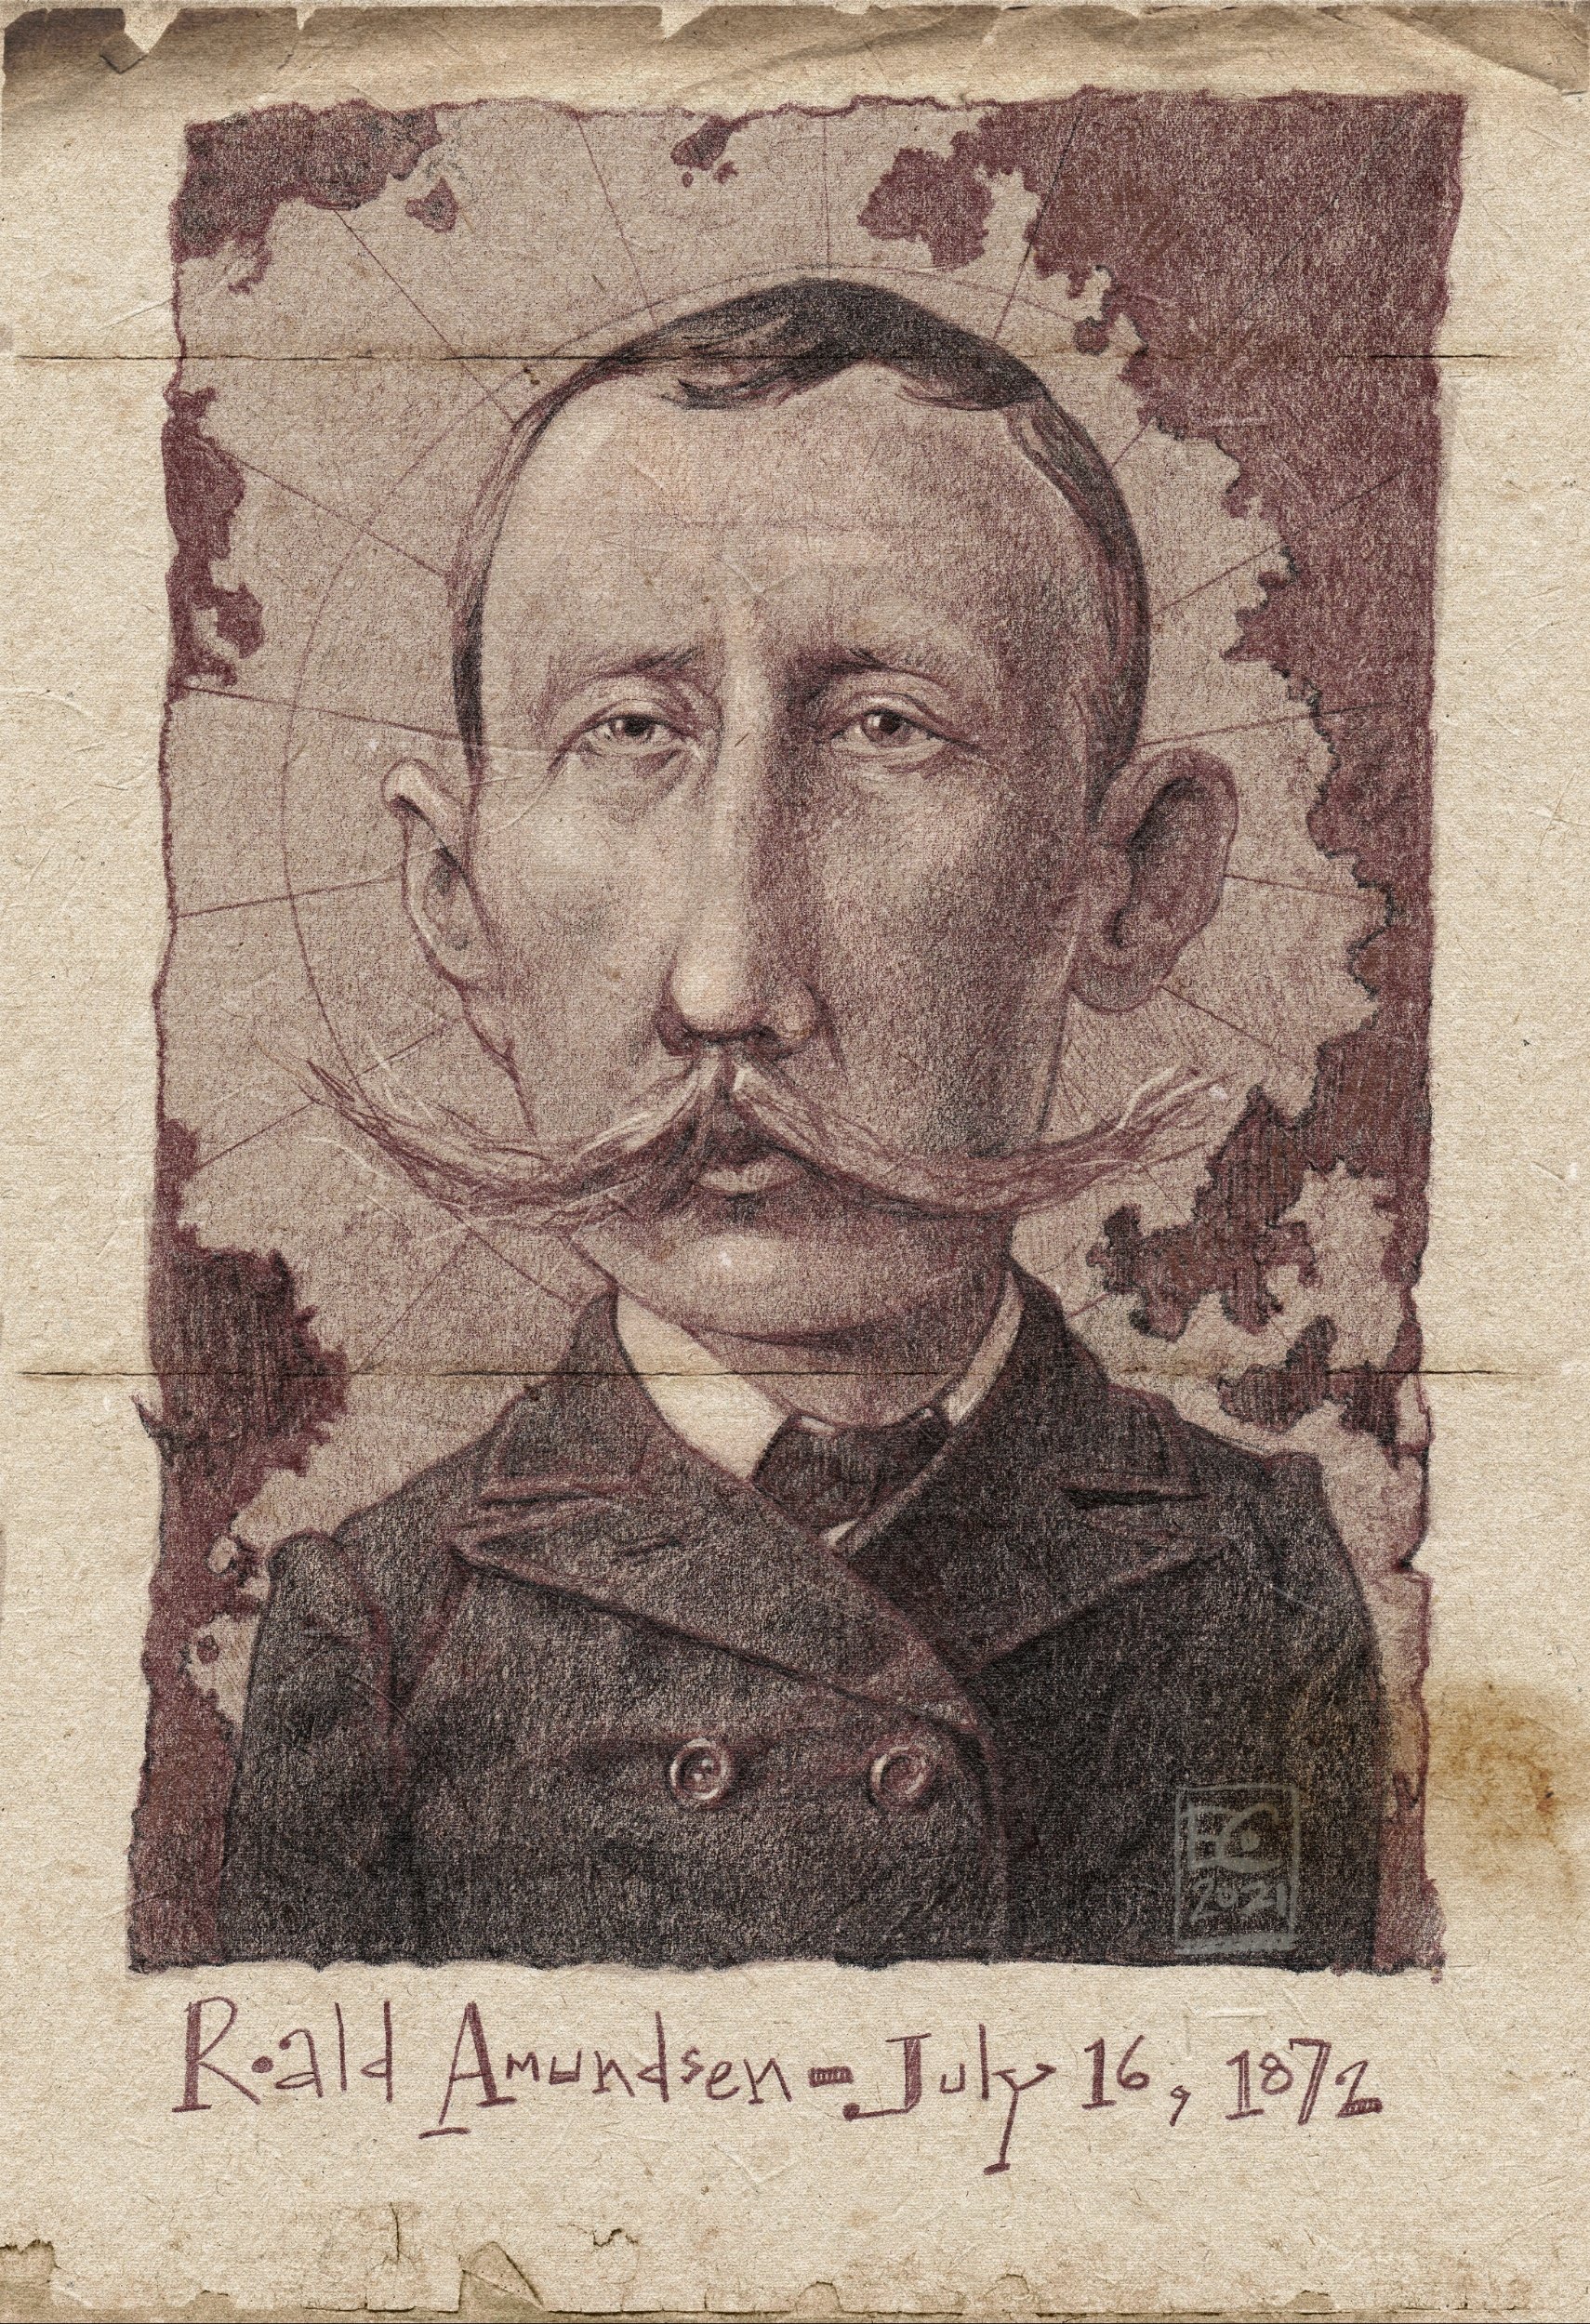 Roald Amundsen - July 16, 1872